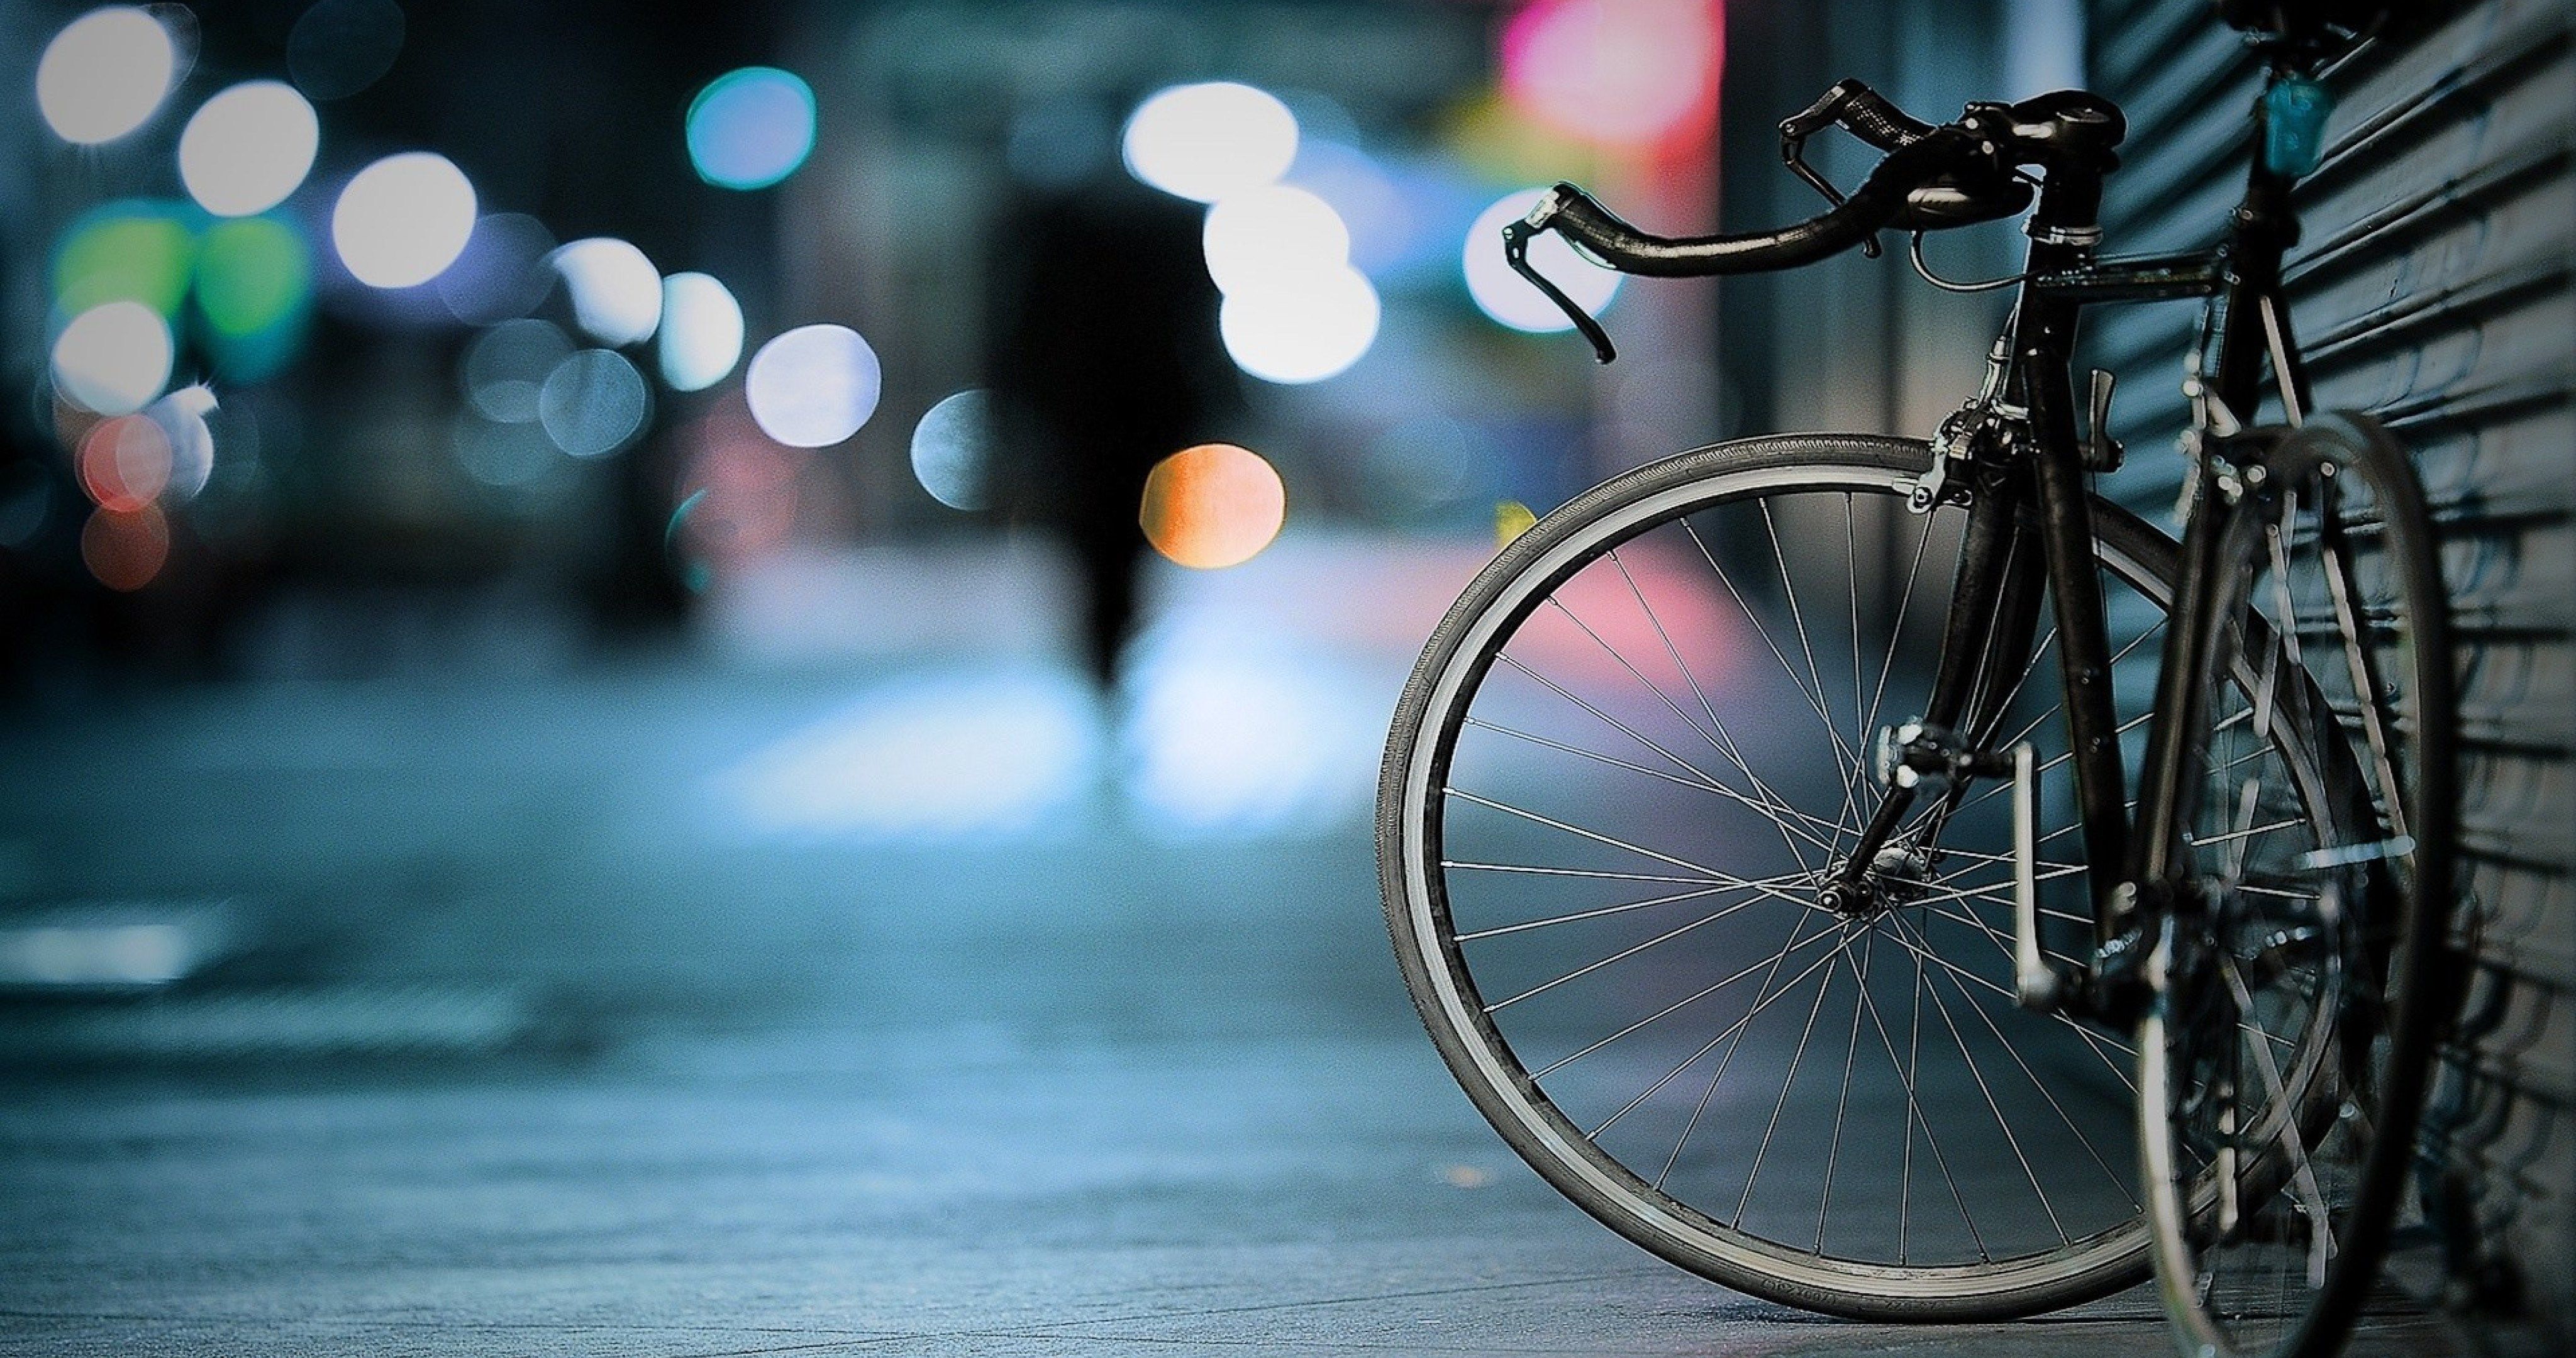 street bike 4k ultra HD wallpaper. Bicycle wallpaper, HD